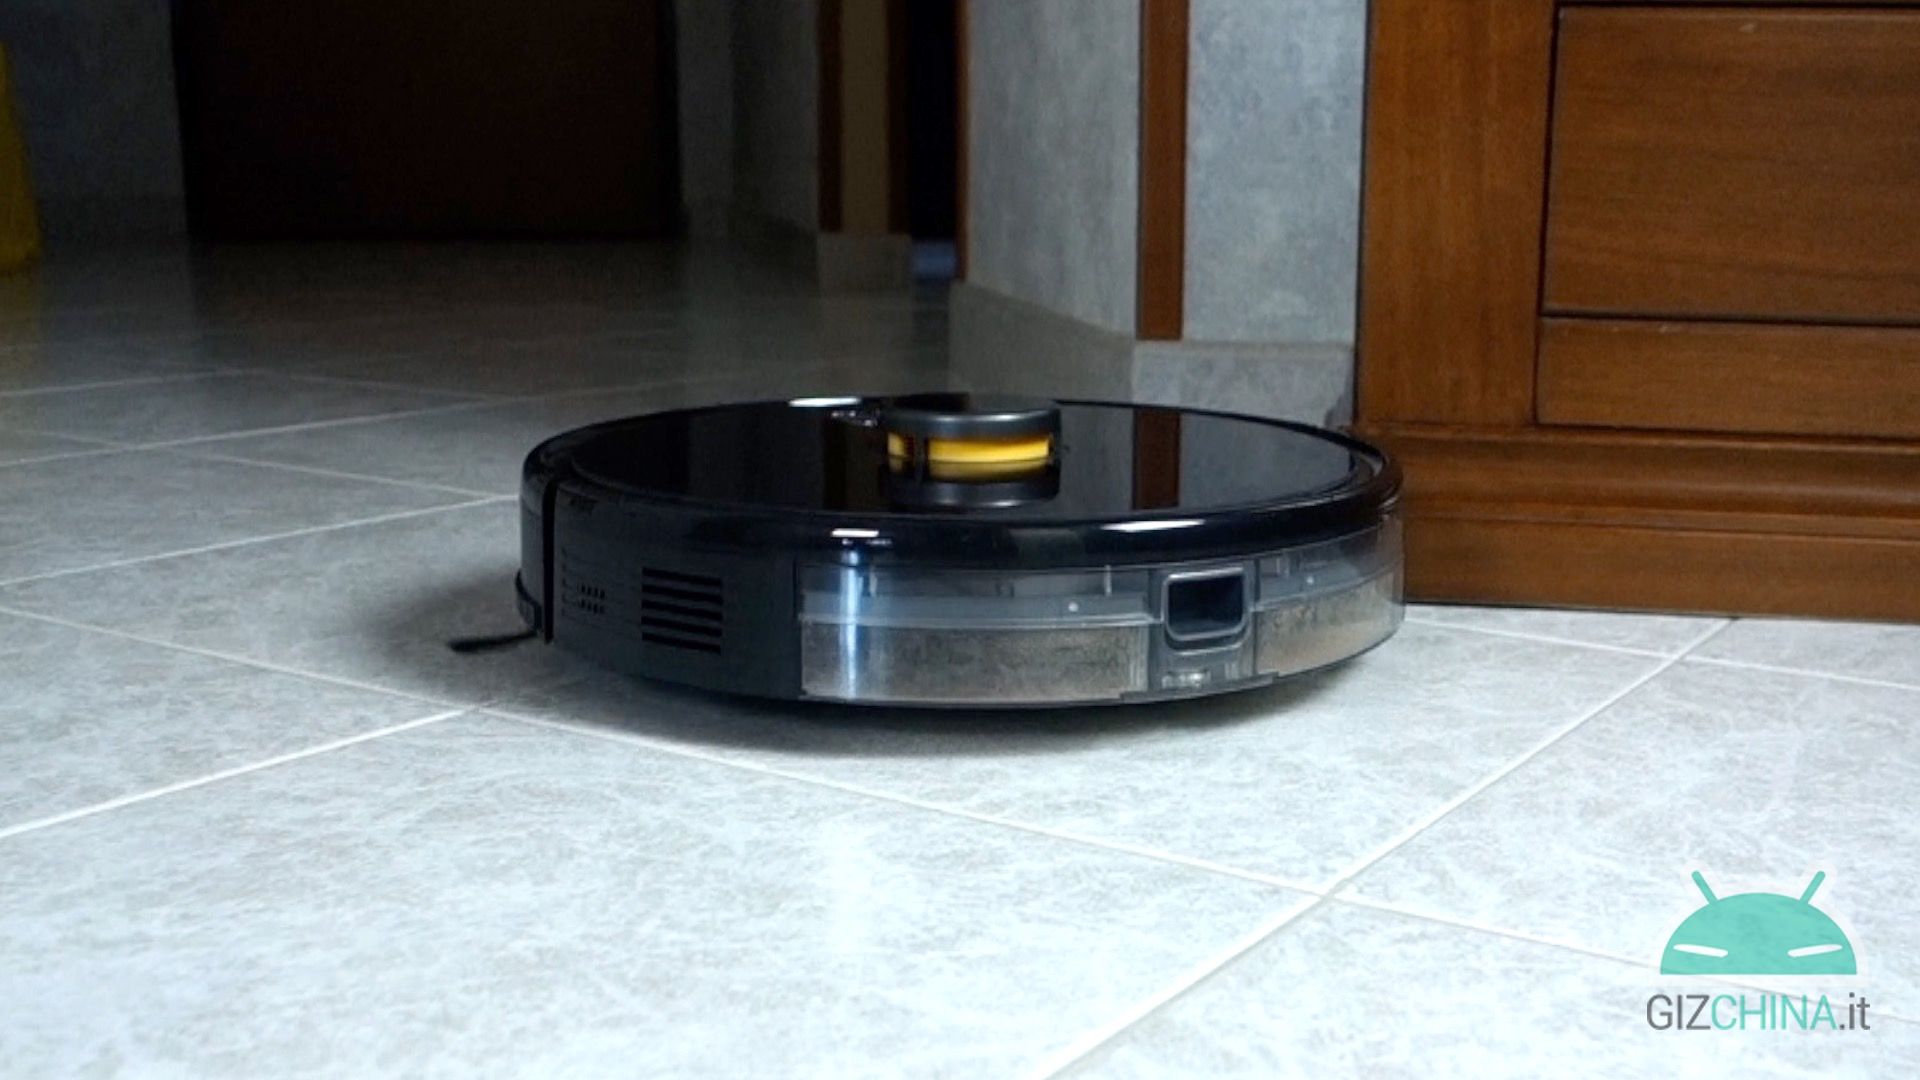 realme techlife robot vacuum cleaner